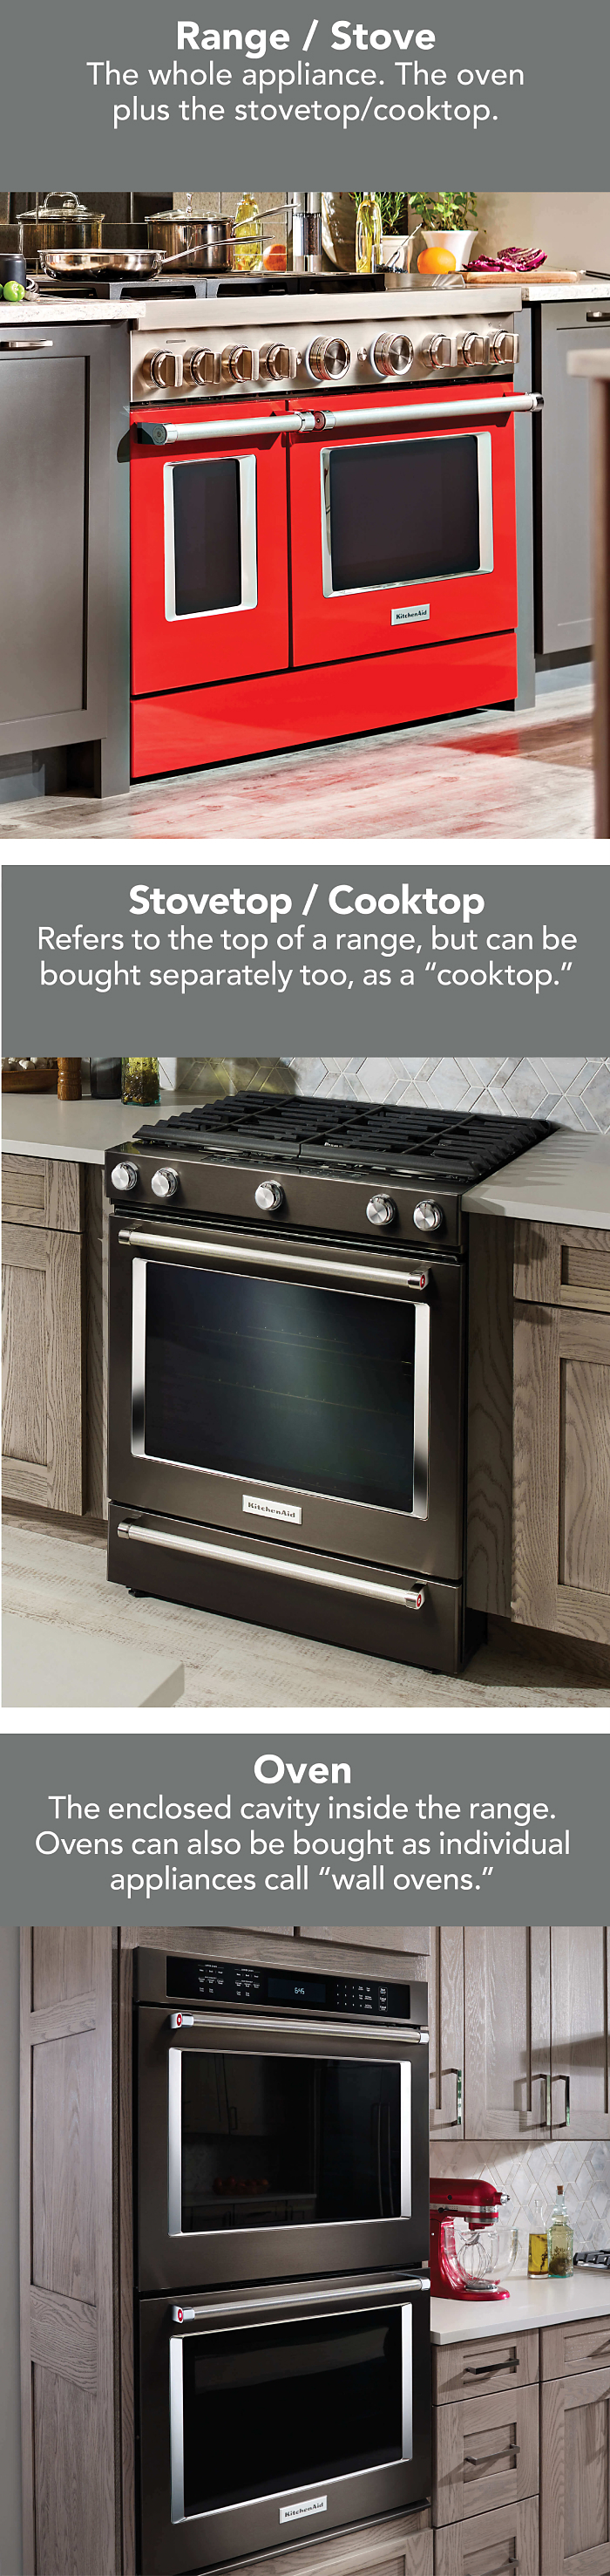 A diagram of a range vs. stove vs. oven.